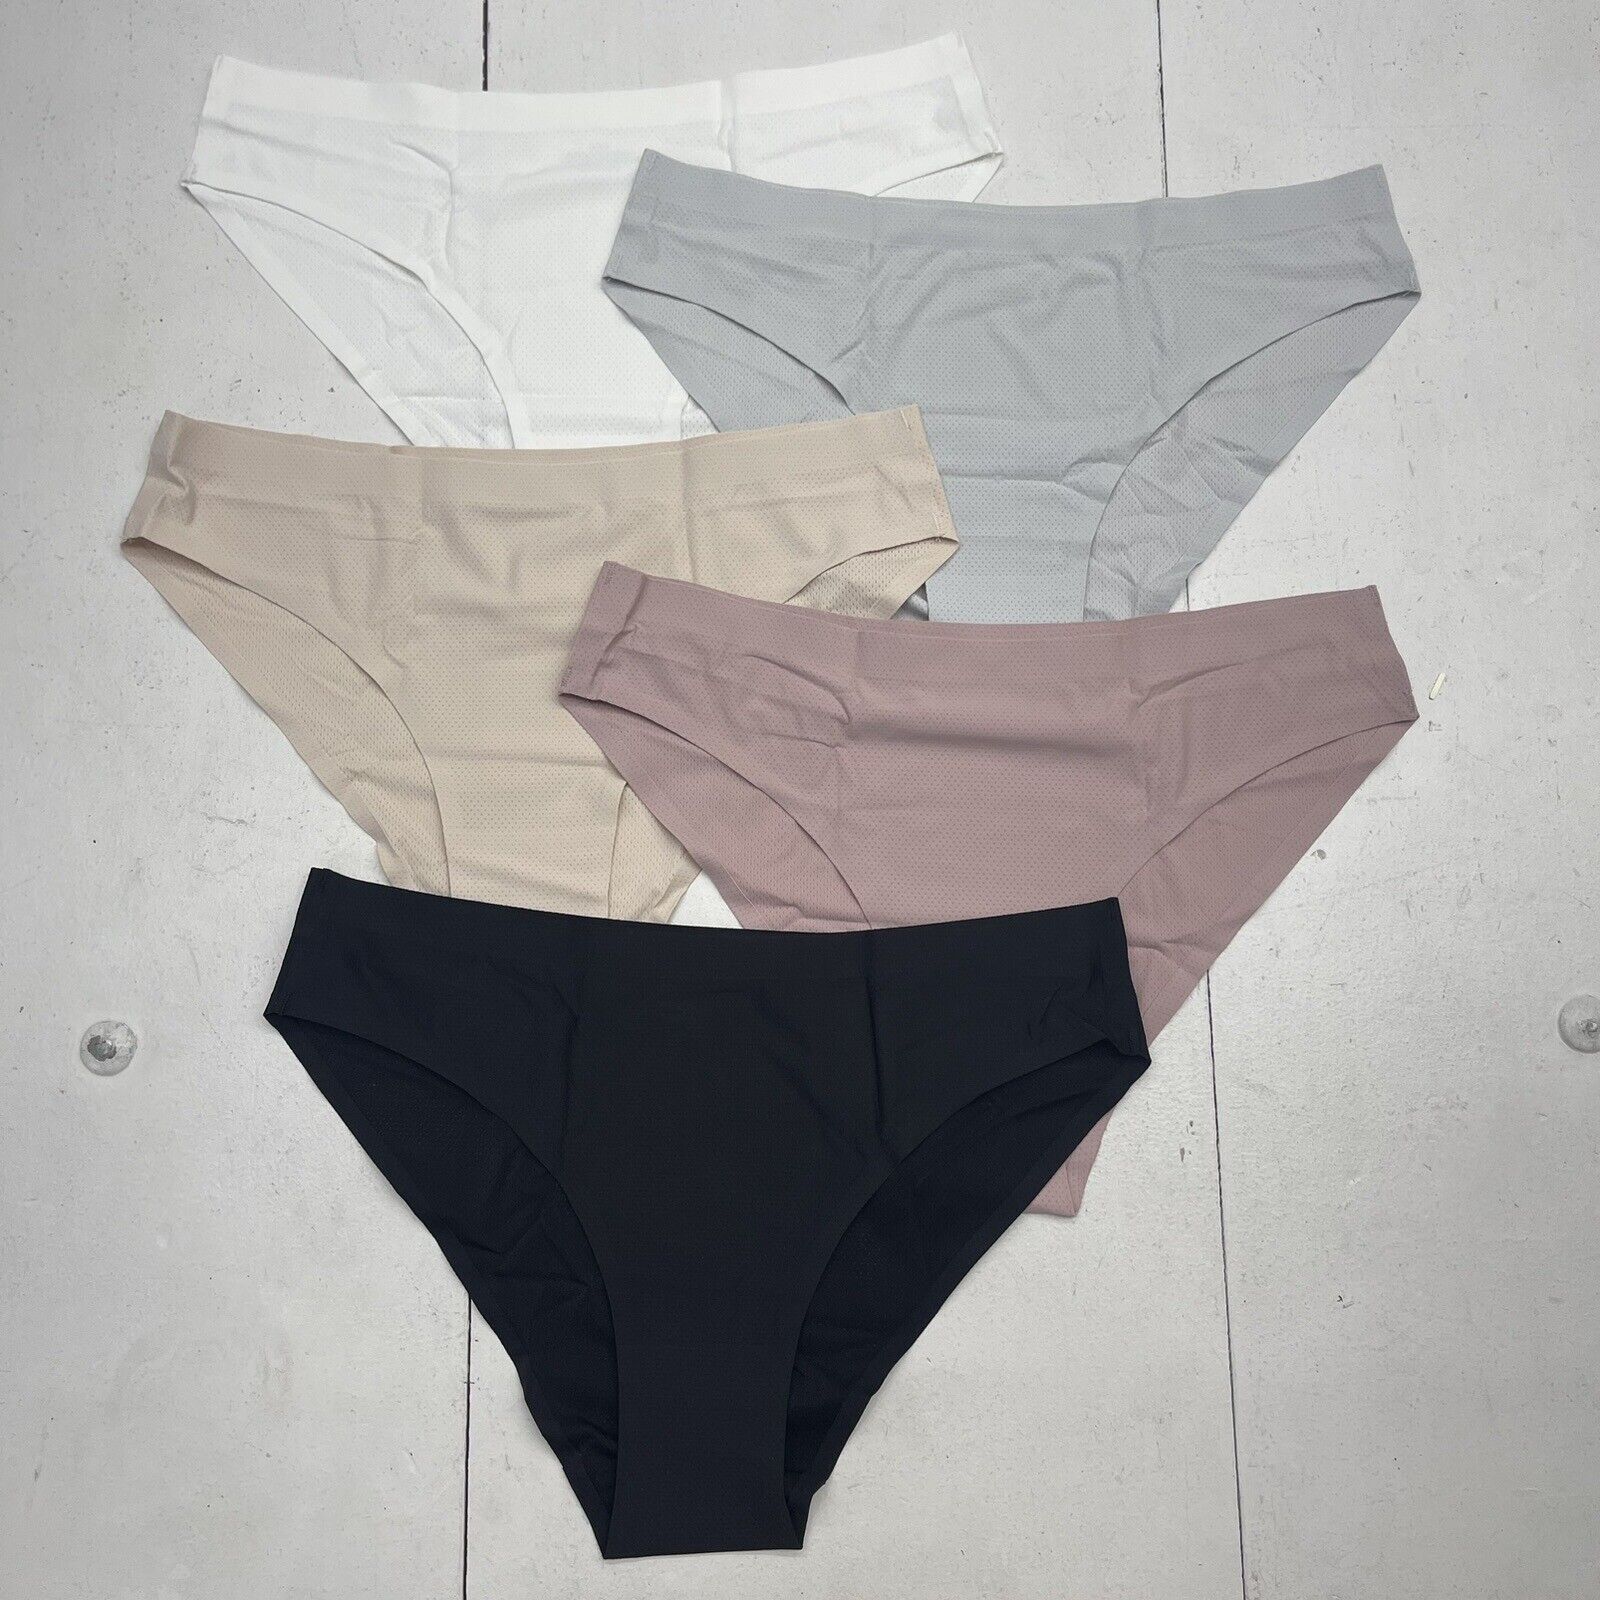 Jaywan 5 Pack Seamless Underwear Multicolored Women's Size Medium